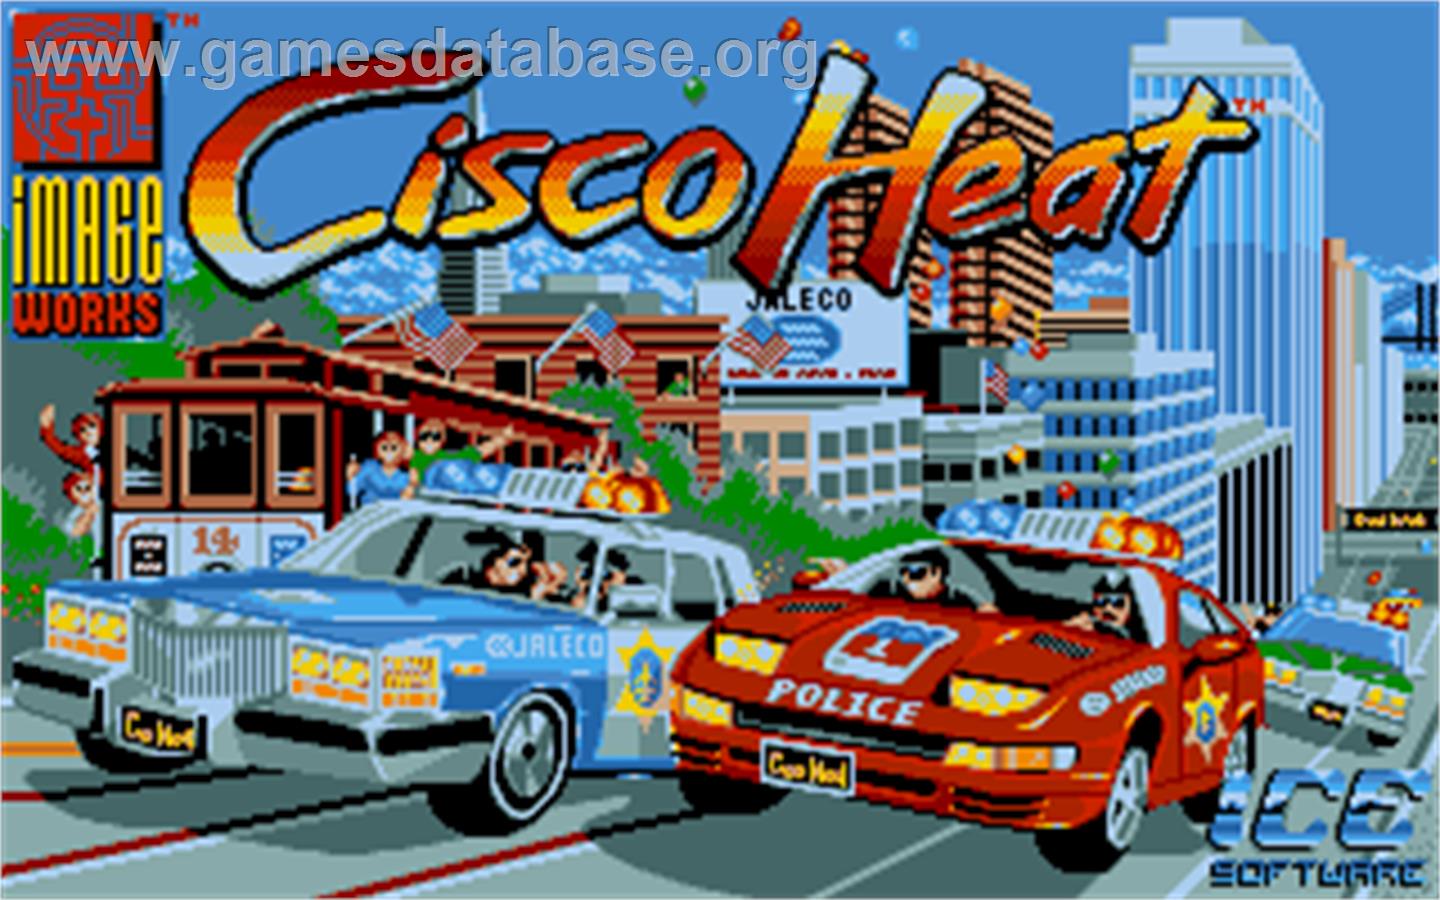 Cisco Heat: All American Police Car Race - Atari ST - Artwork - Title Screen